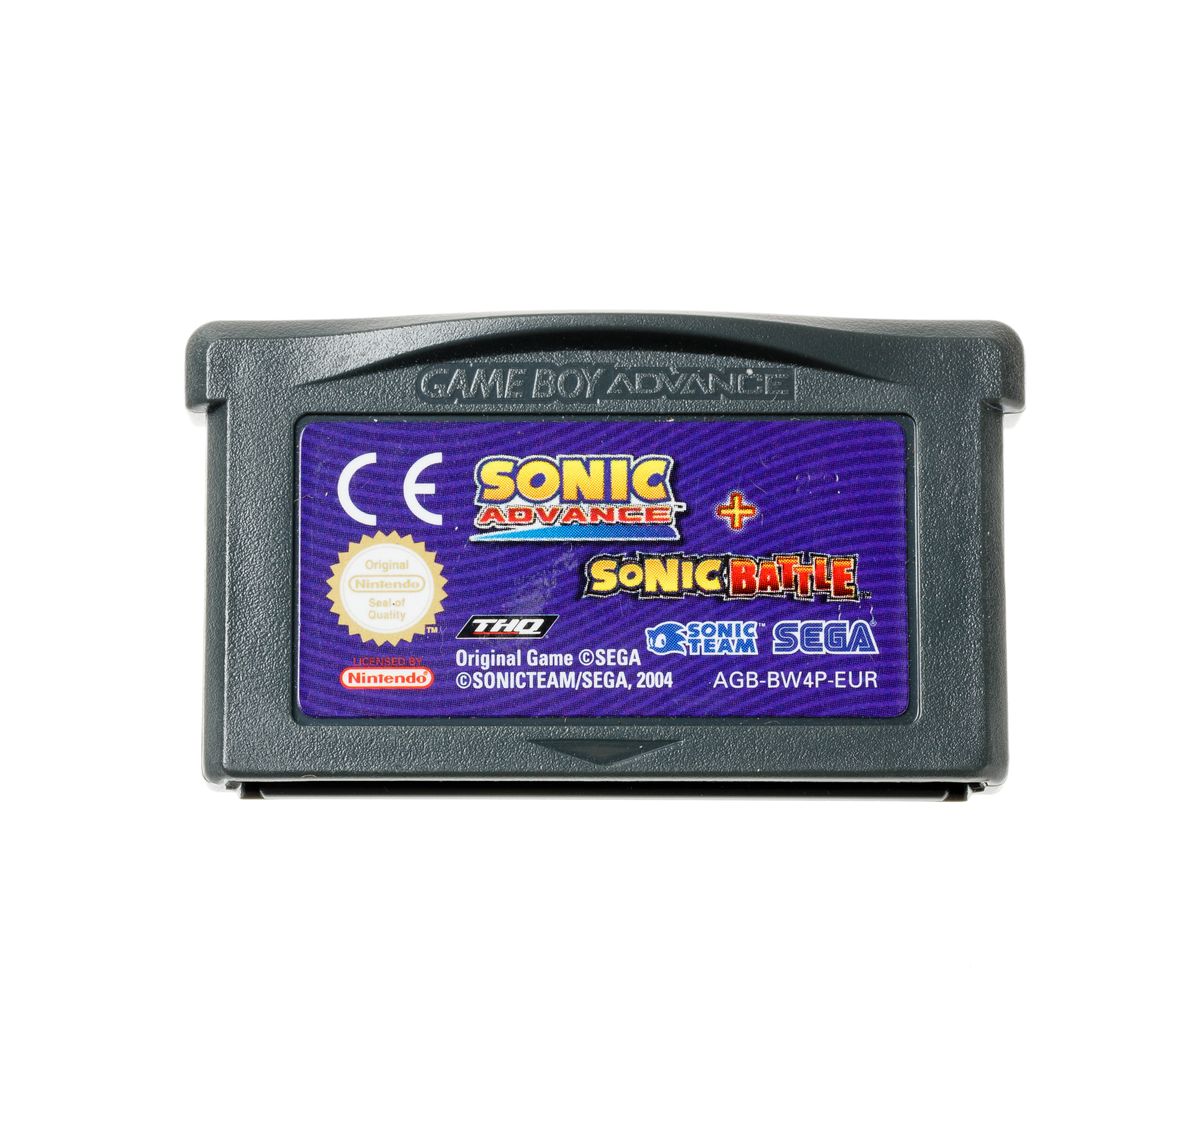 Sonic Advance + Sonic Battle - Gameboy Advance Games